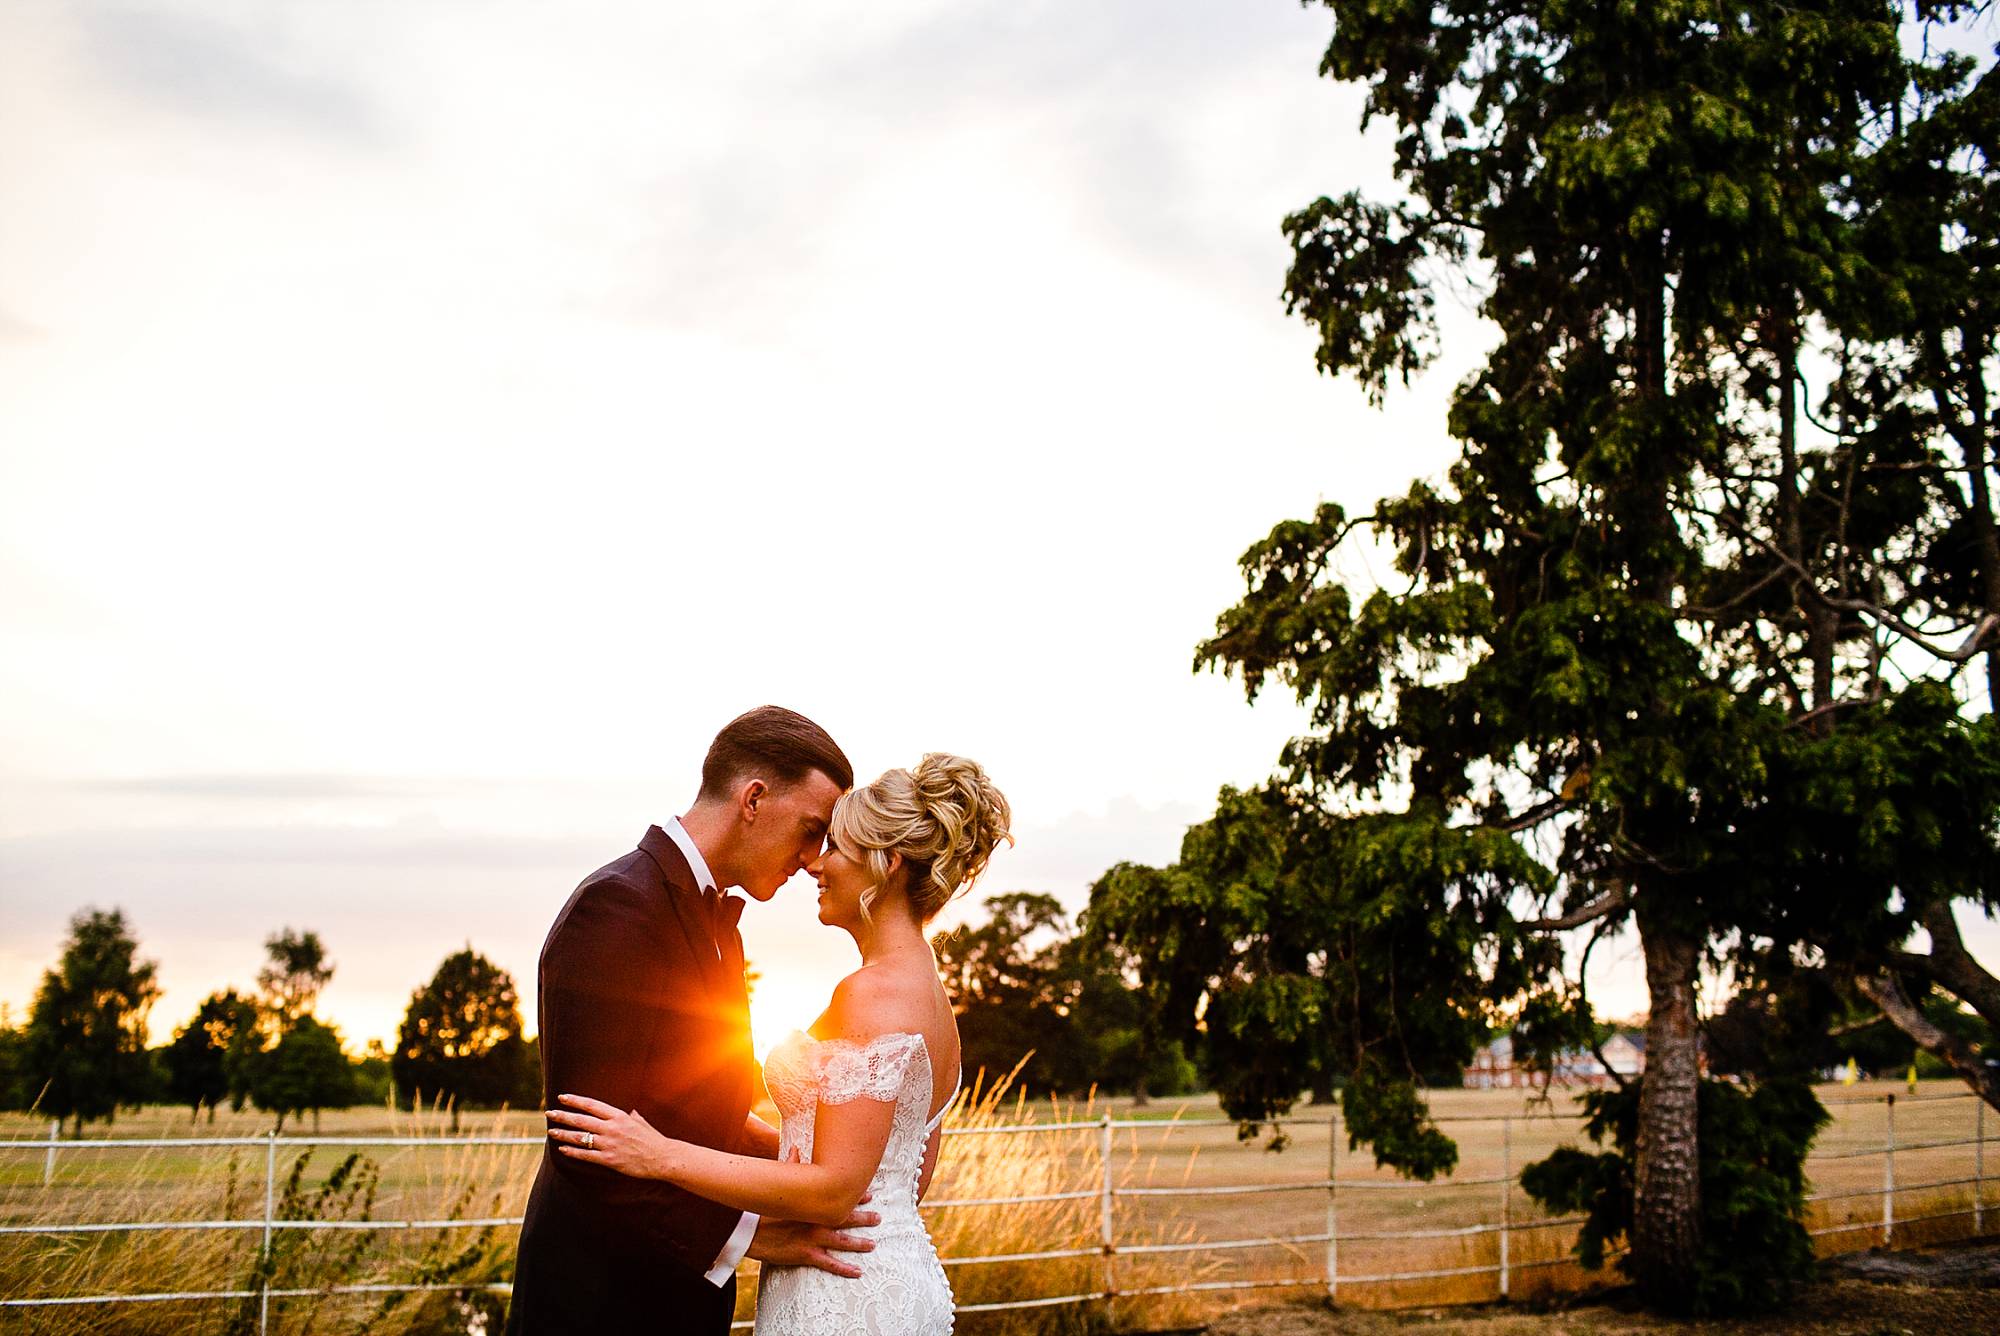 Gosfield Hall Wedding Photographer - Sunset